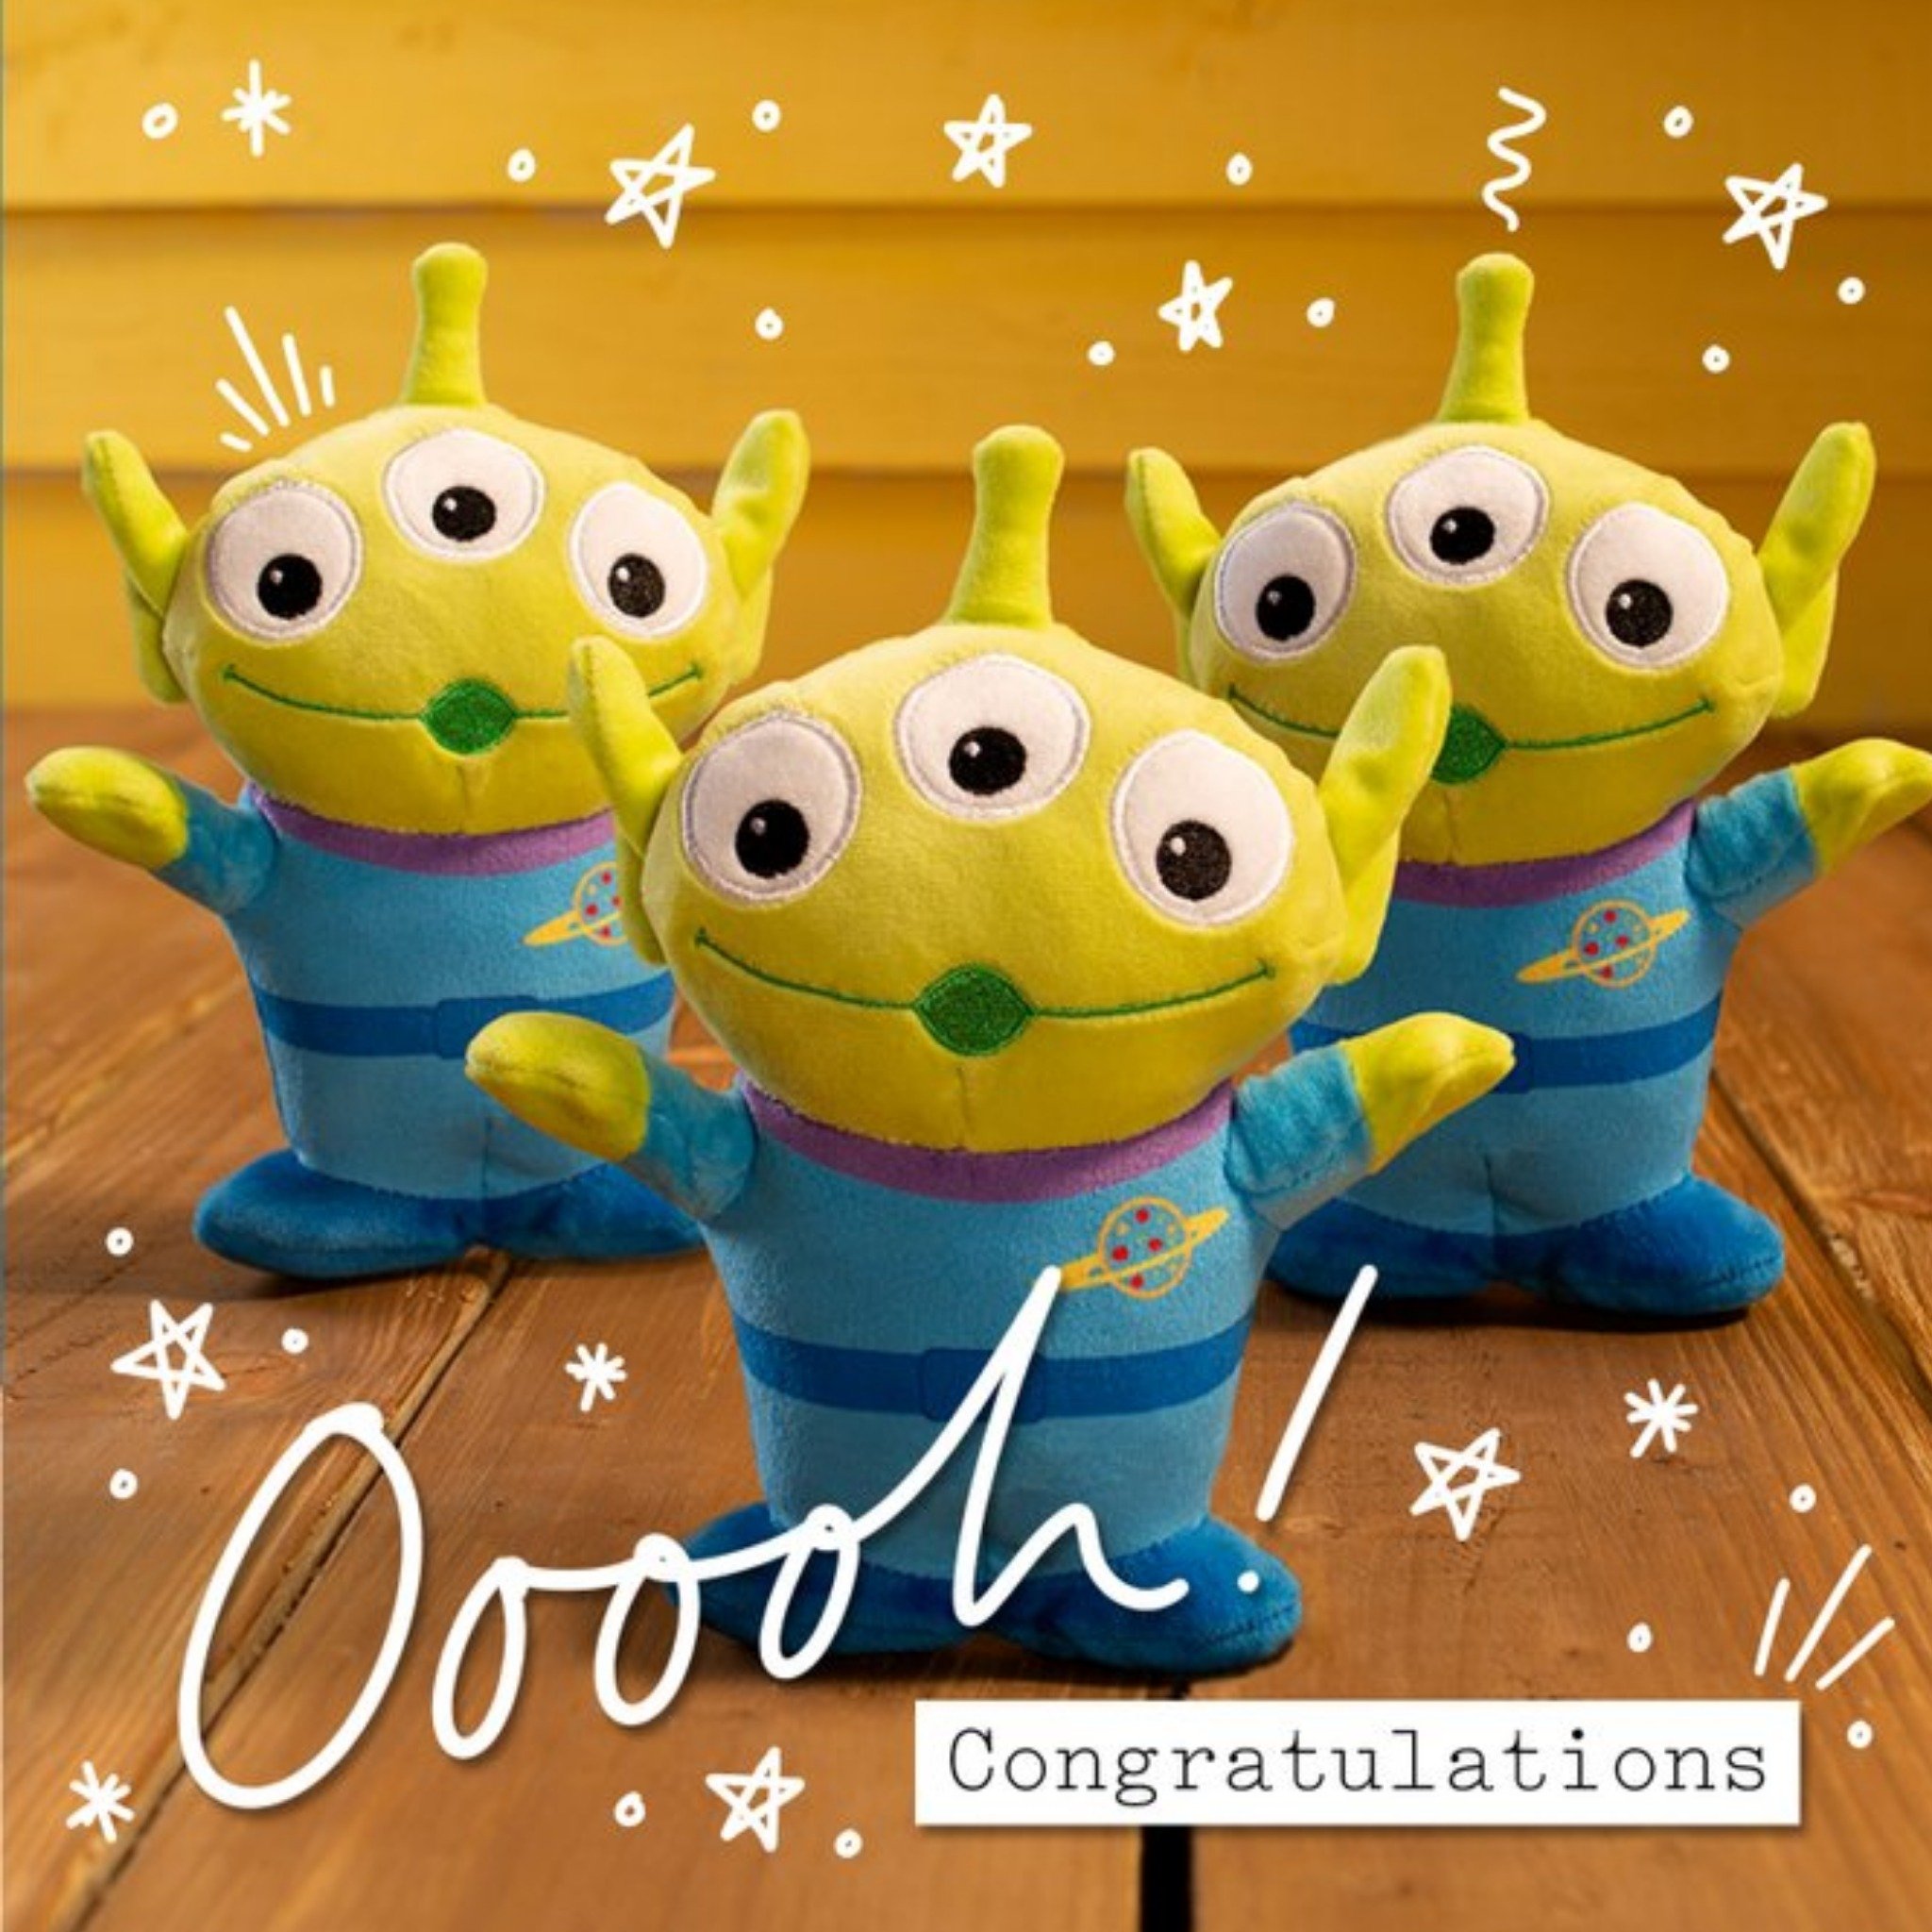 Cute Disney Plush Toy Story Aliens Congratulations Card, Large